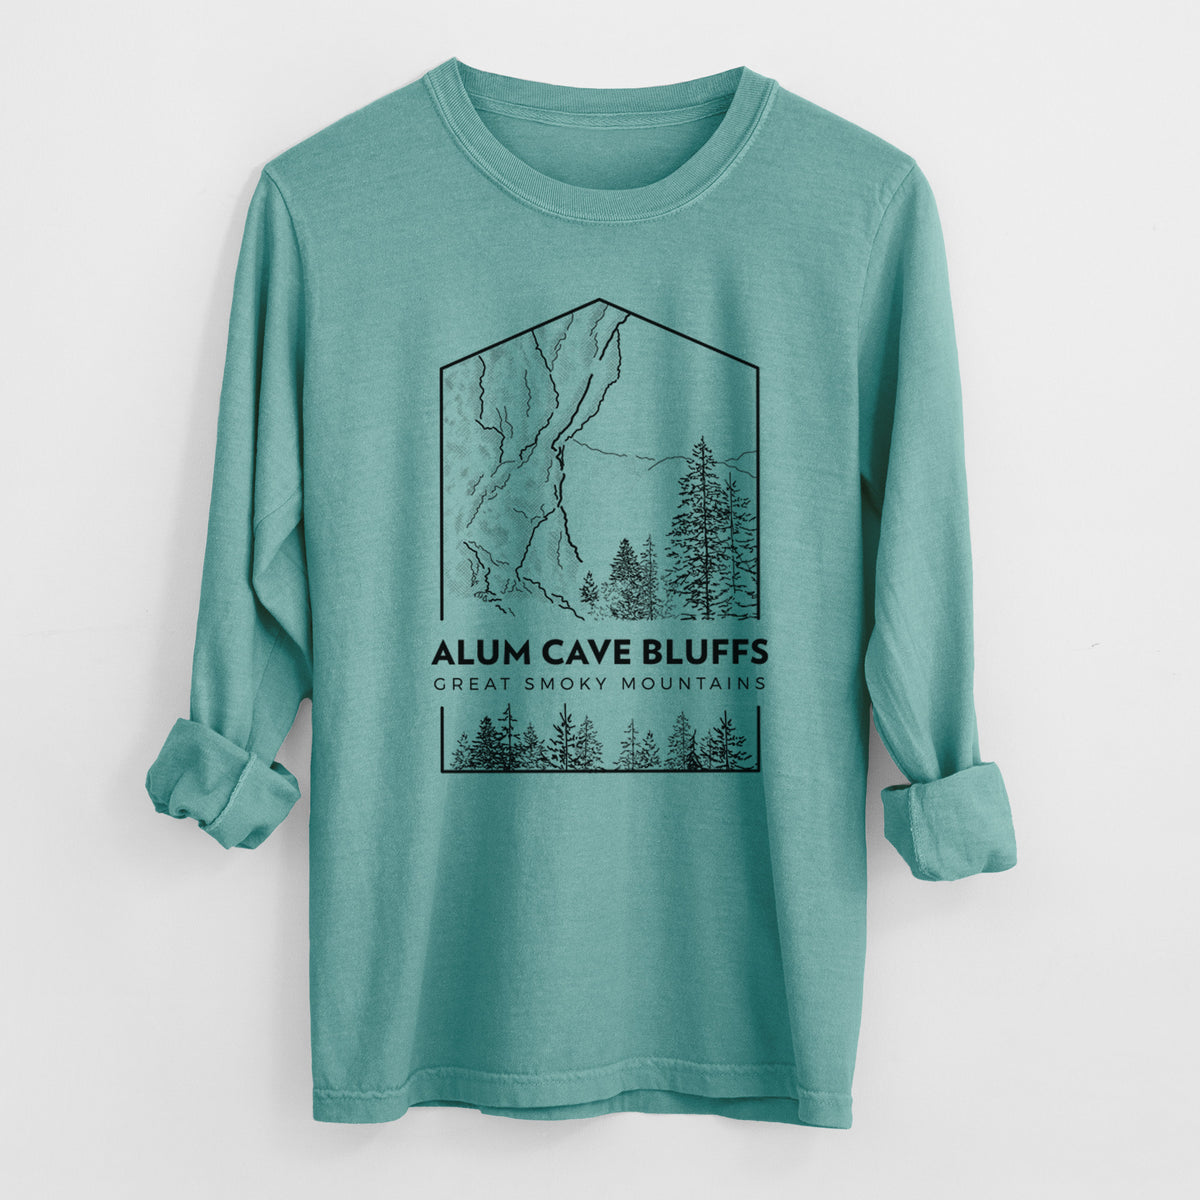 Alum Cave Bluffs - Great Smoky Mountains National Park - Heavyweight 100% Cotton Long Sleeve